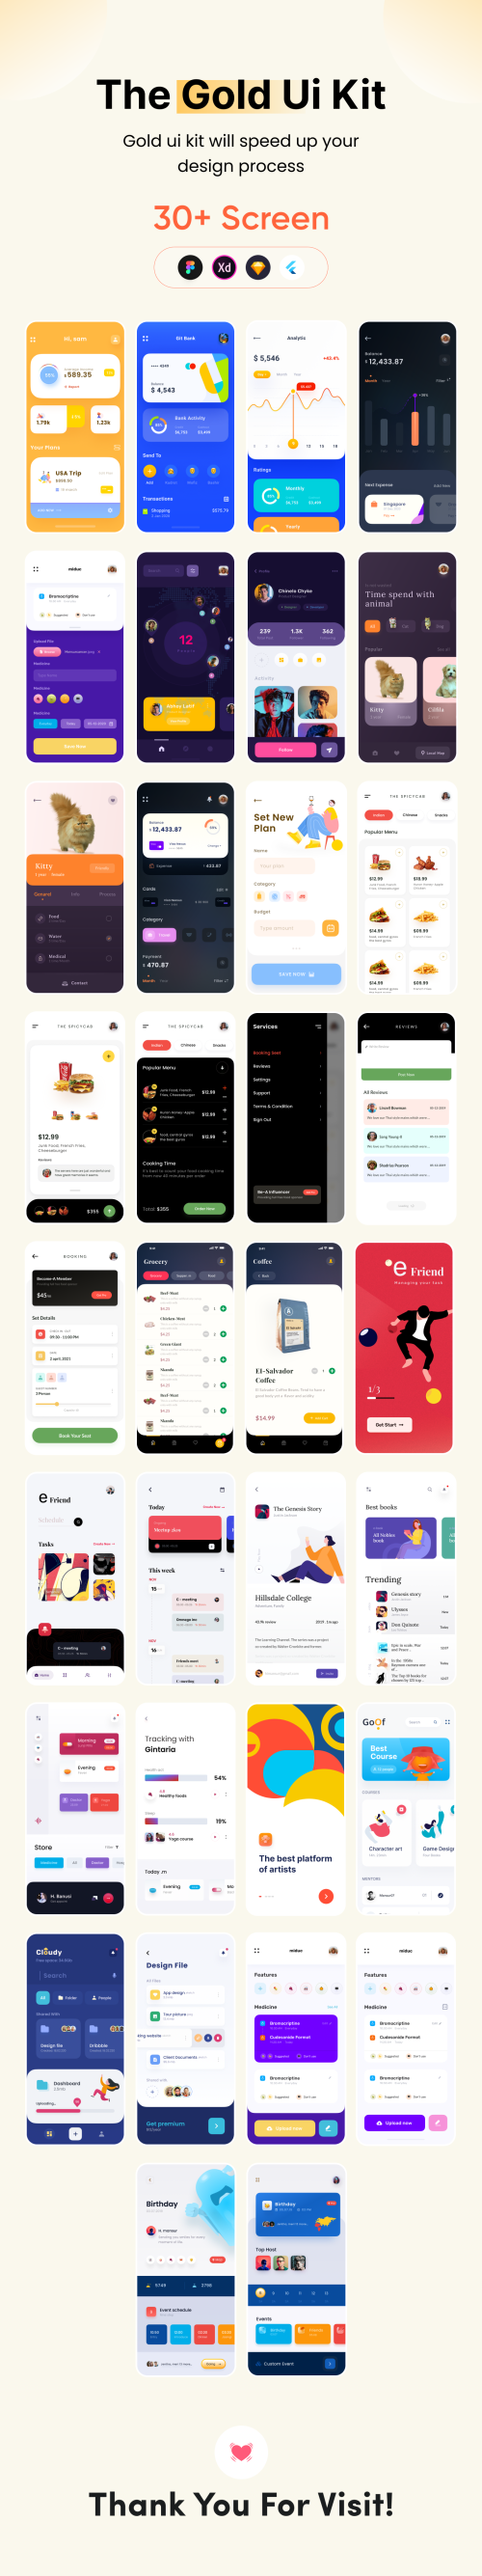 UIHut - The Gold App UI Kit - 8589